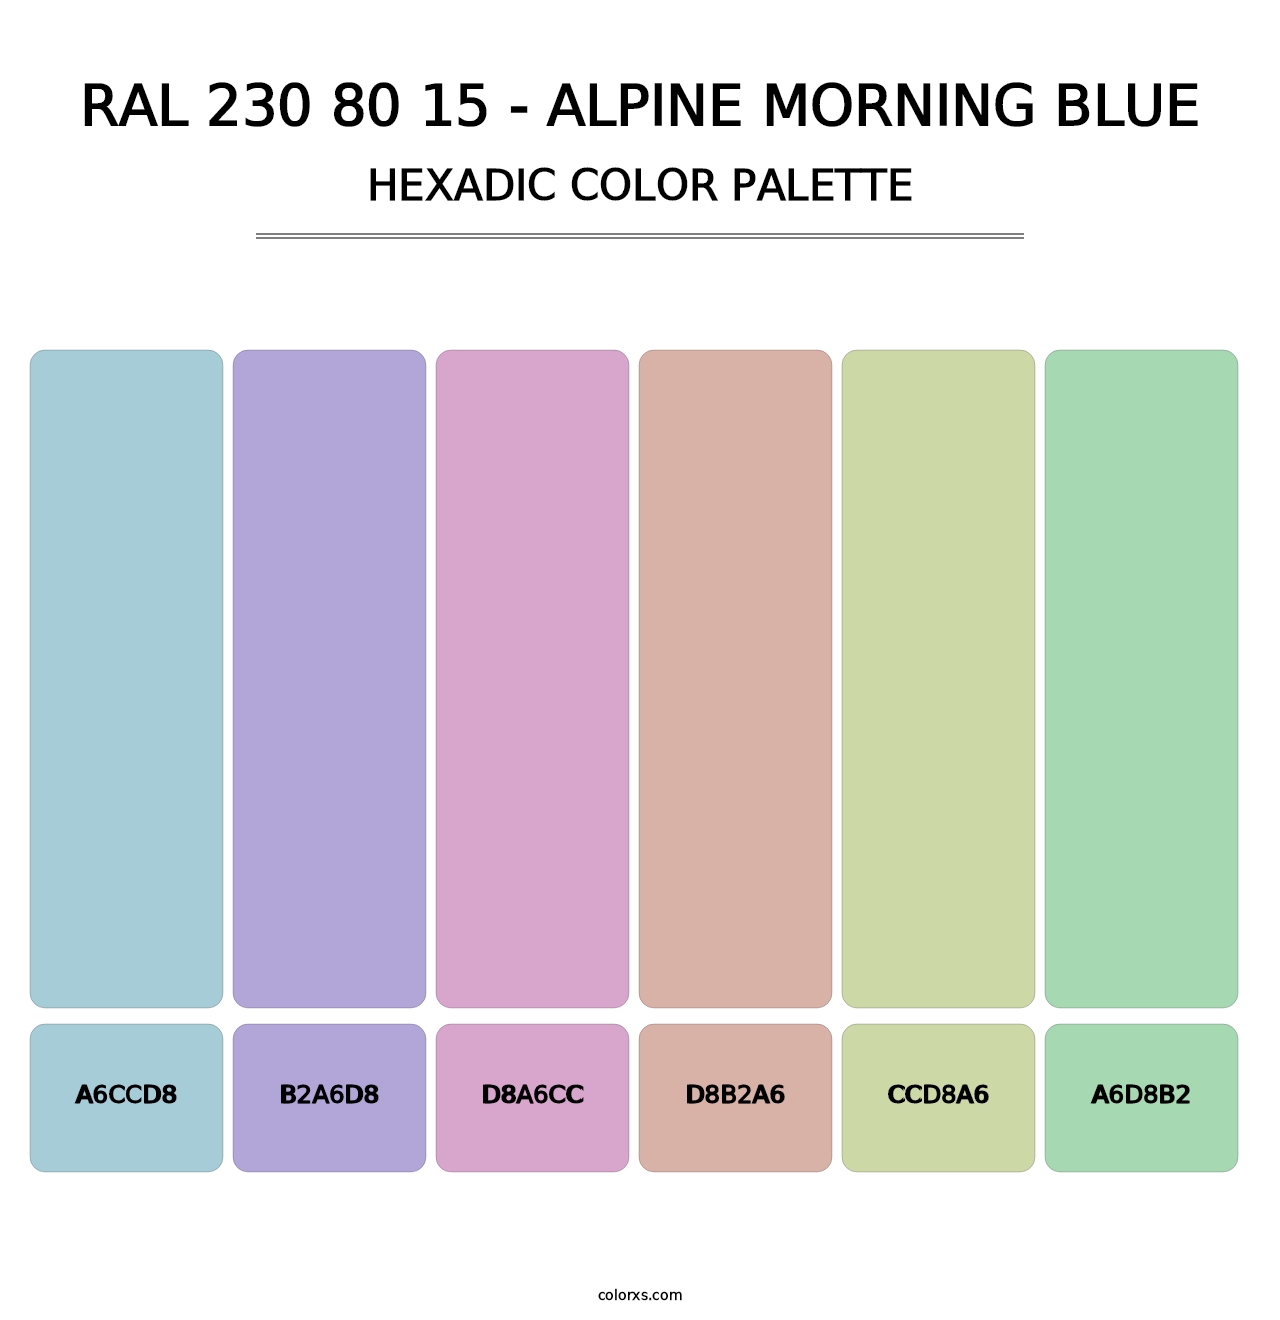 RAL 230 80 15 - Alpine Morning Blue - Hexadic Color Palette